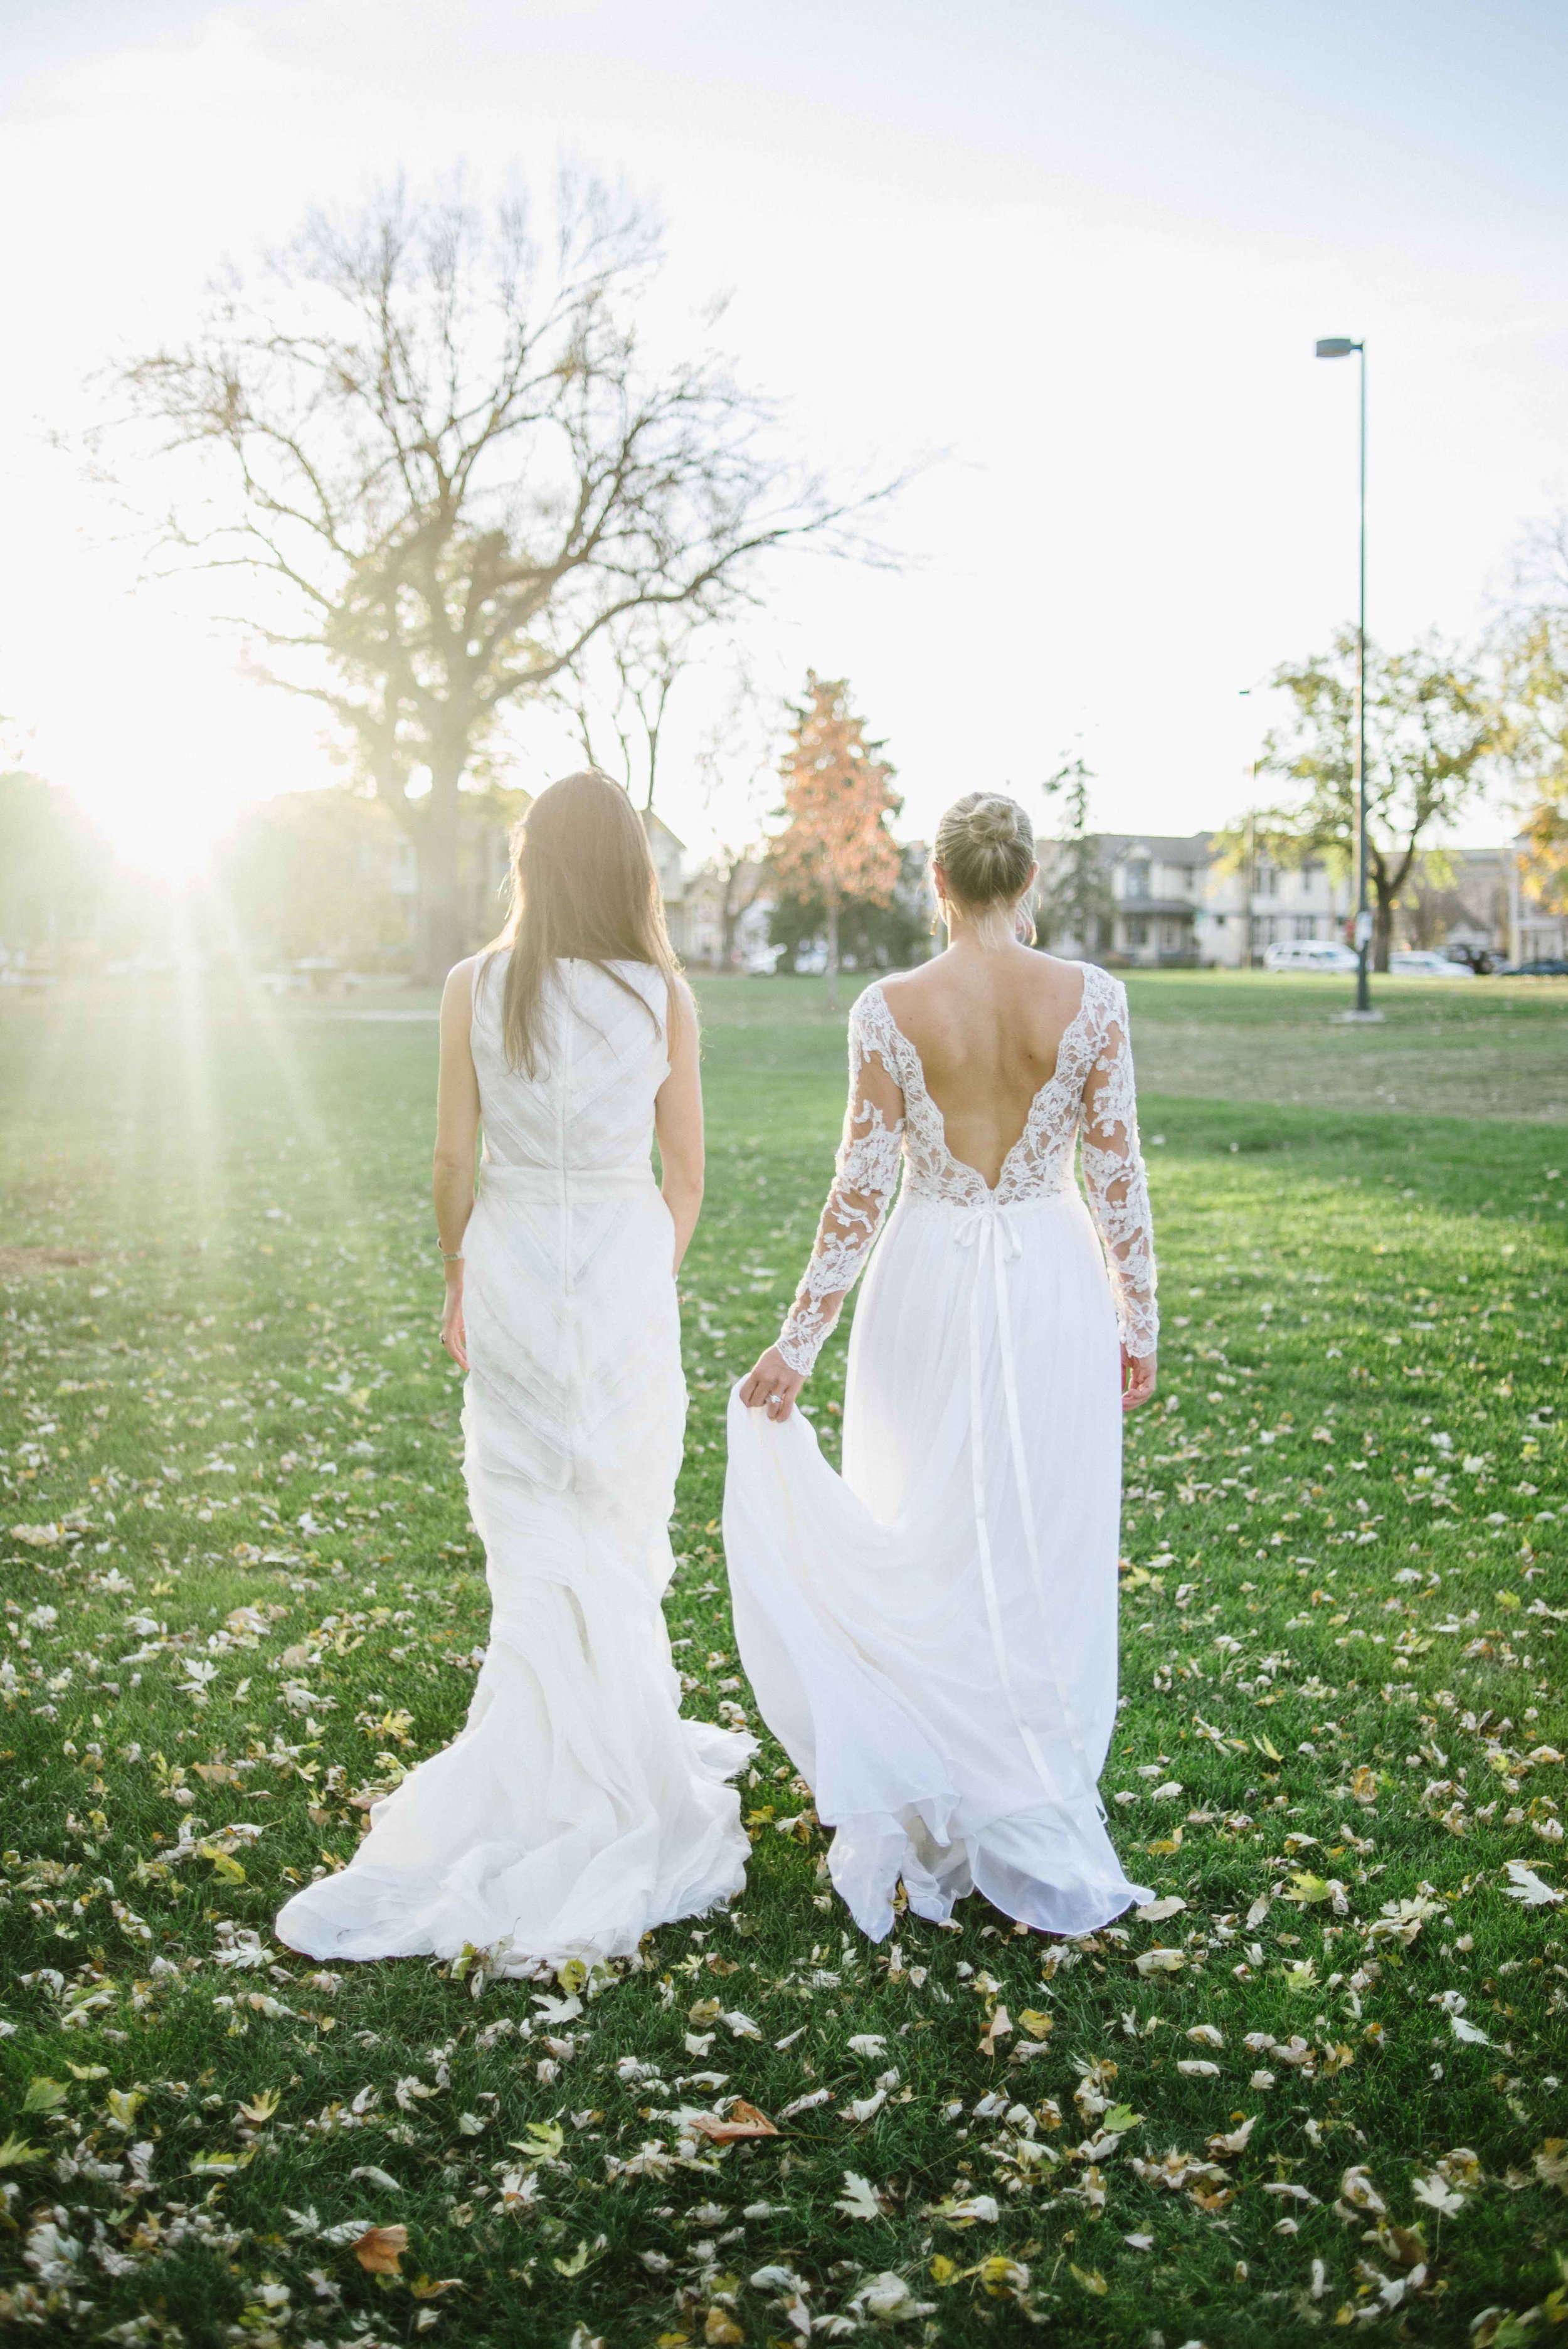  Fall Wedding Inspiration | J. Mendel "Zoe" &amp; Anne Barge "Leyland" | available at Little White Dress Bridal Shop in Denver | Photography: Kelly Leggett 